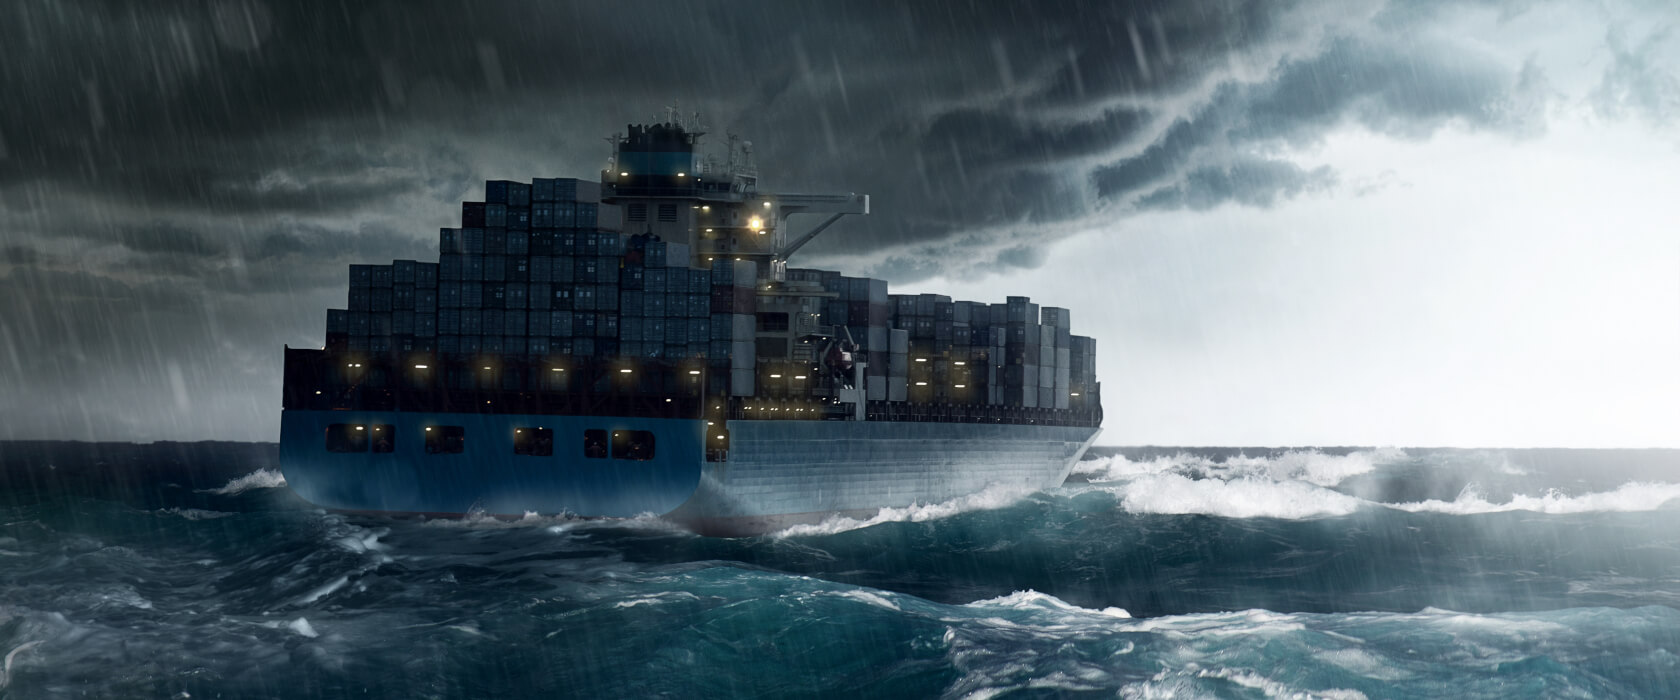 Containerschiff im Sturm